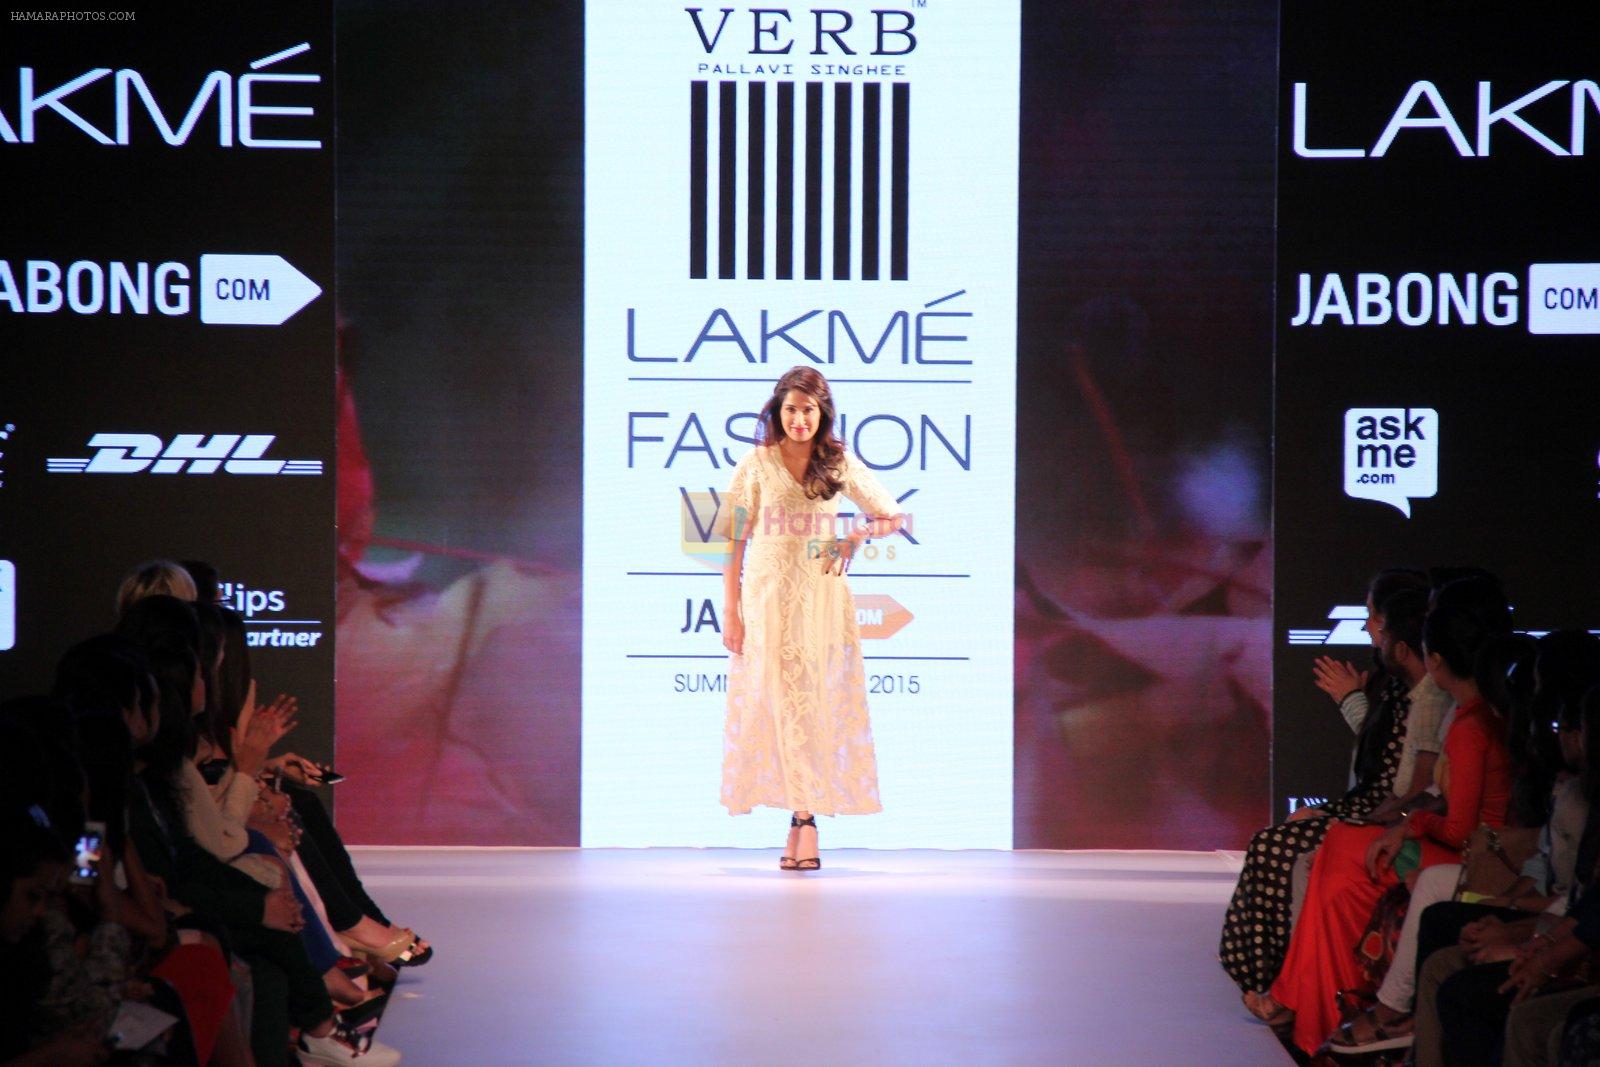 Sagarika Ghatge walks the ramp for Verb by Pallavi Singhee at Lakme Fashion Week 2015 Day 1 on 18th March 2015